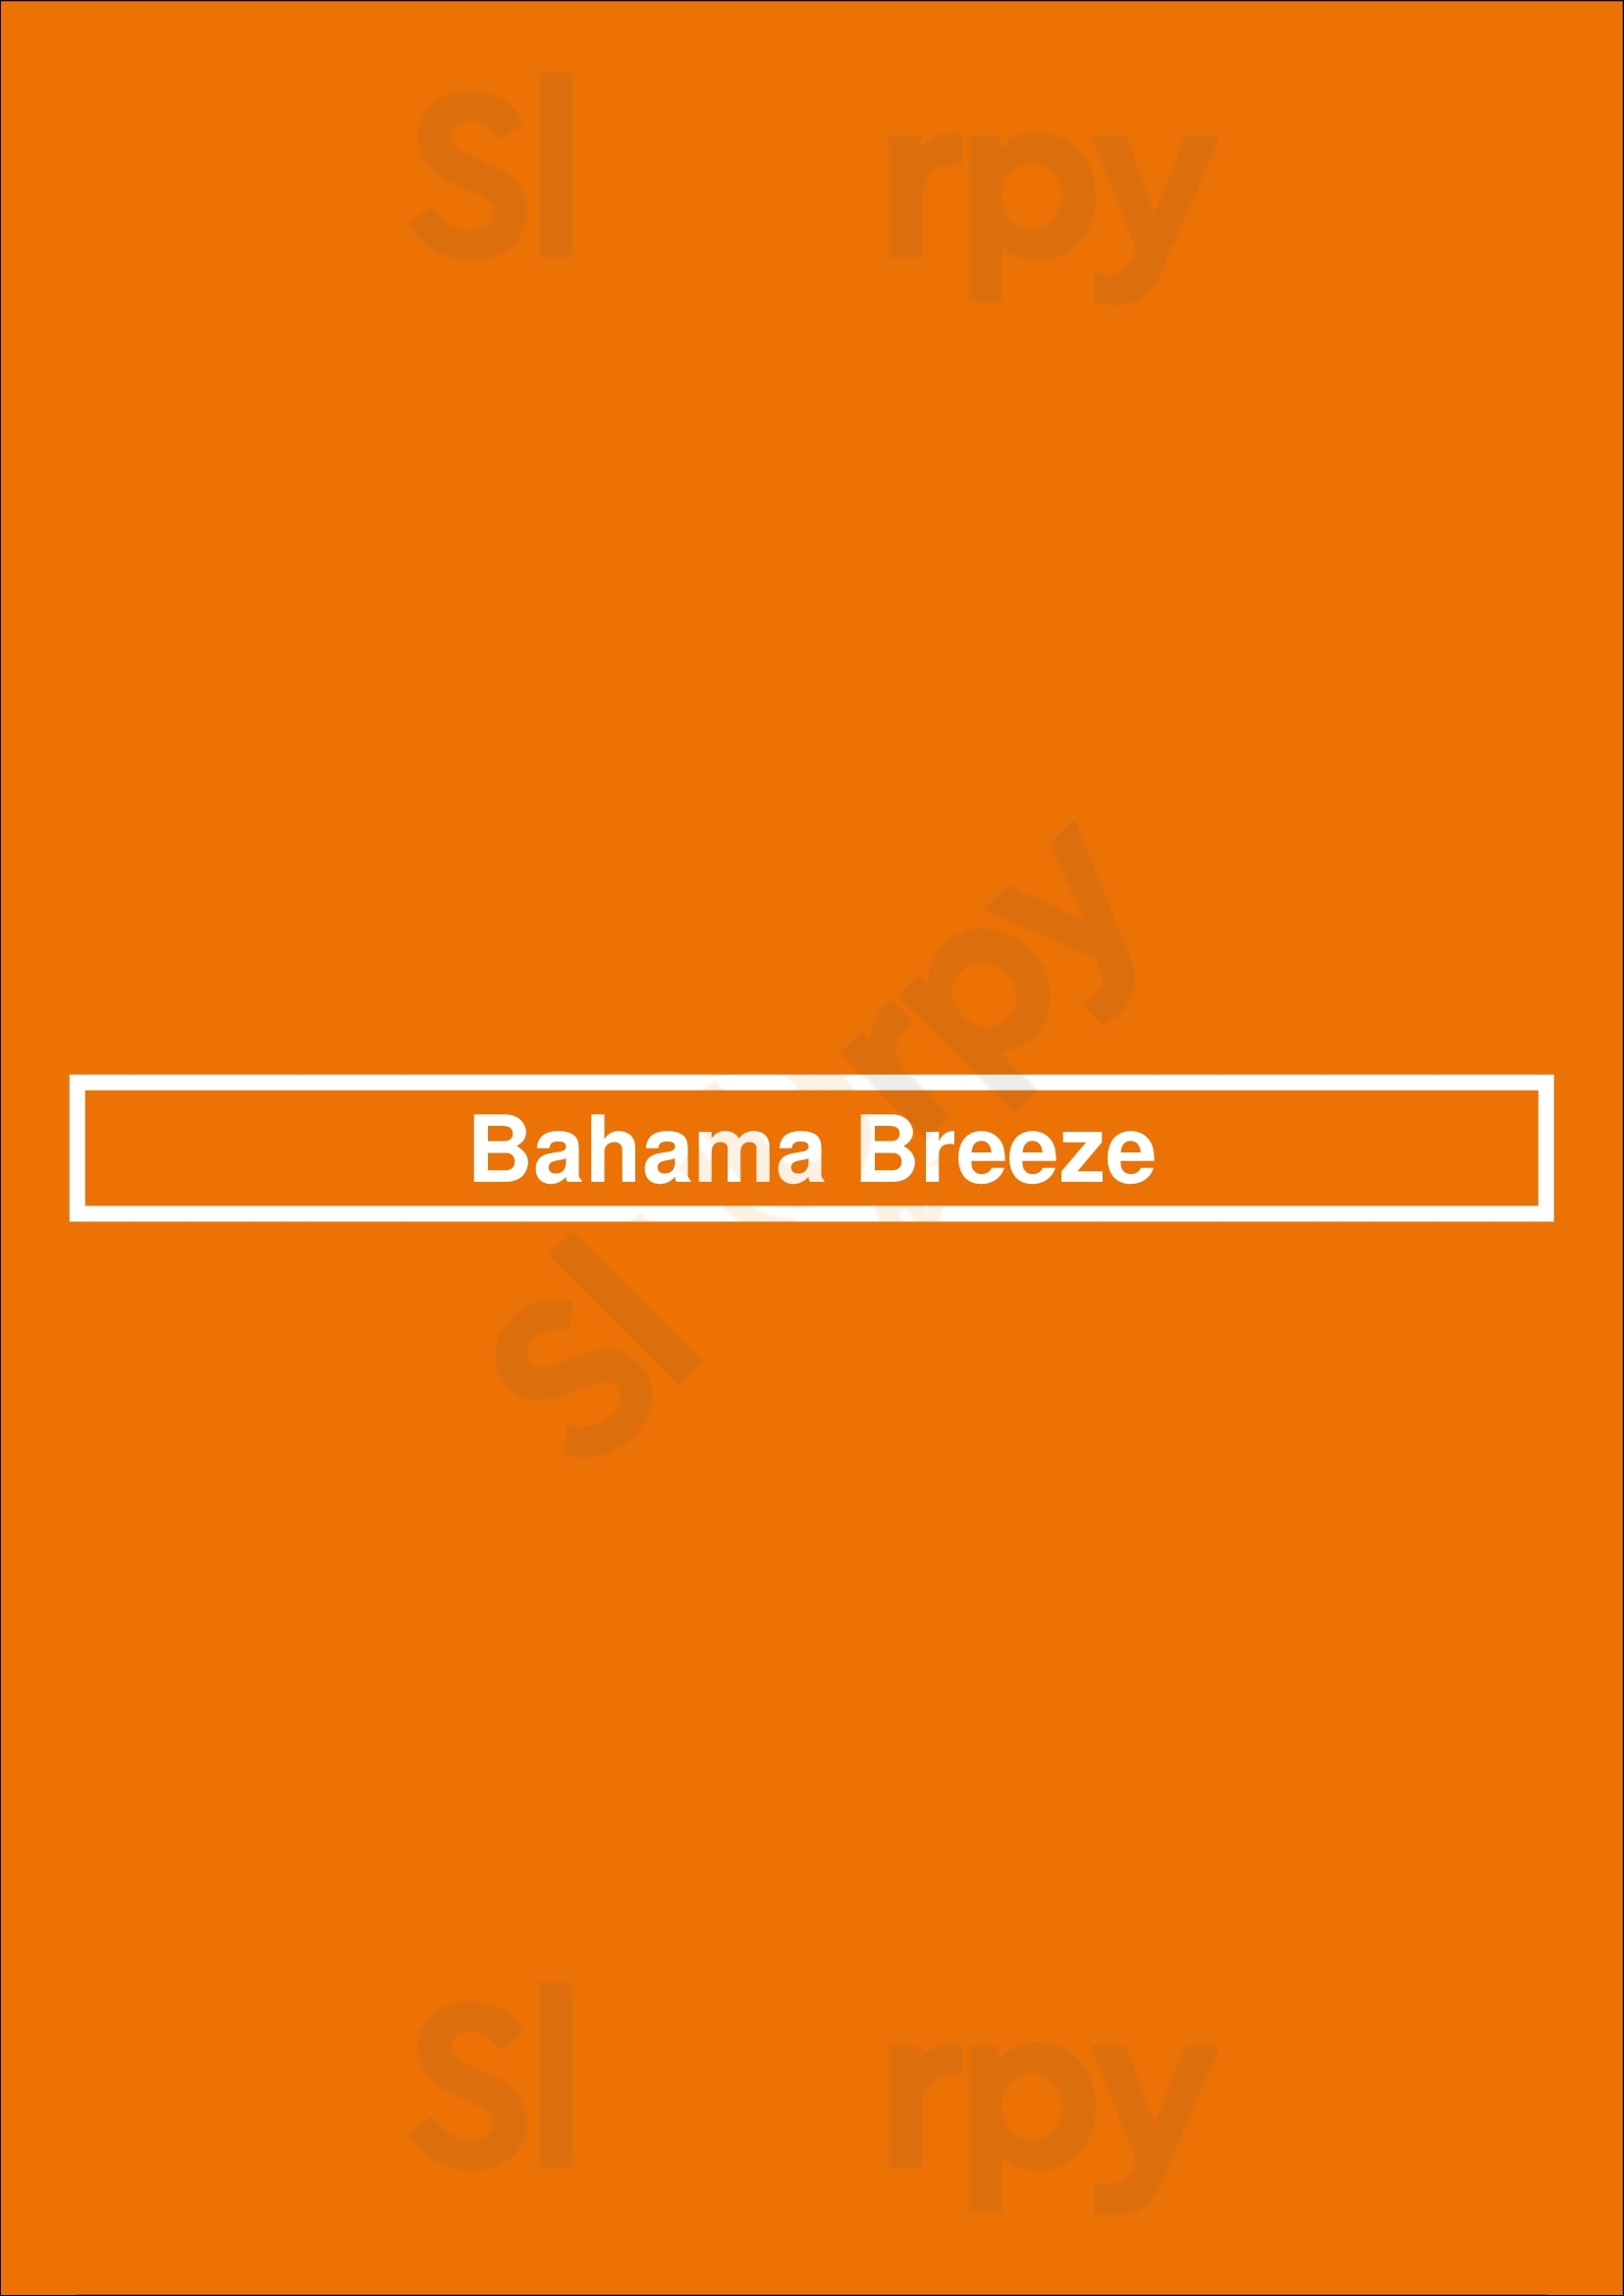 Bahama Breeze Tukwila Menu - 1